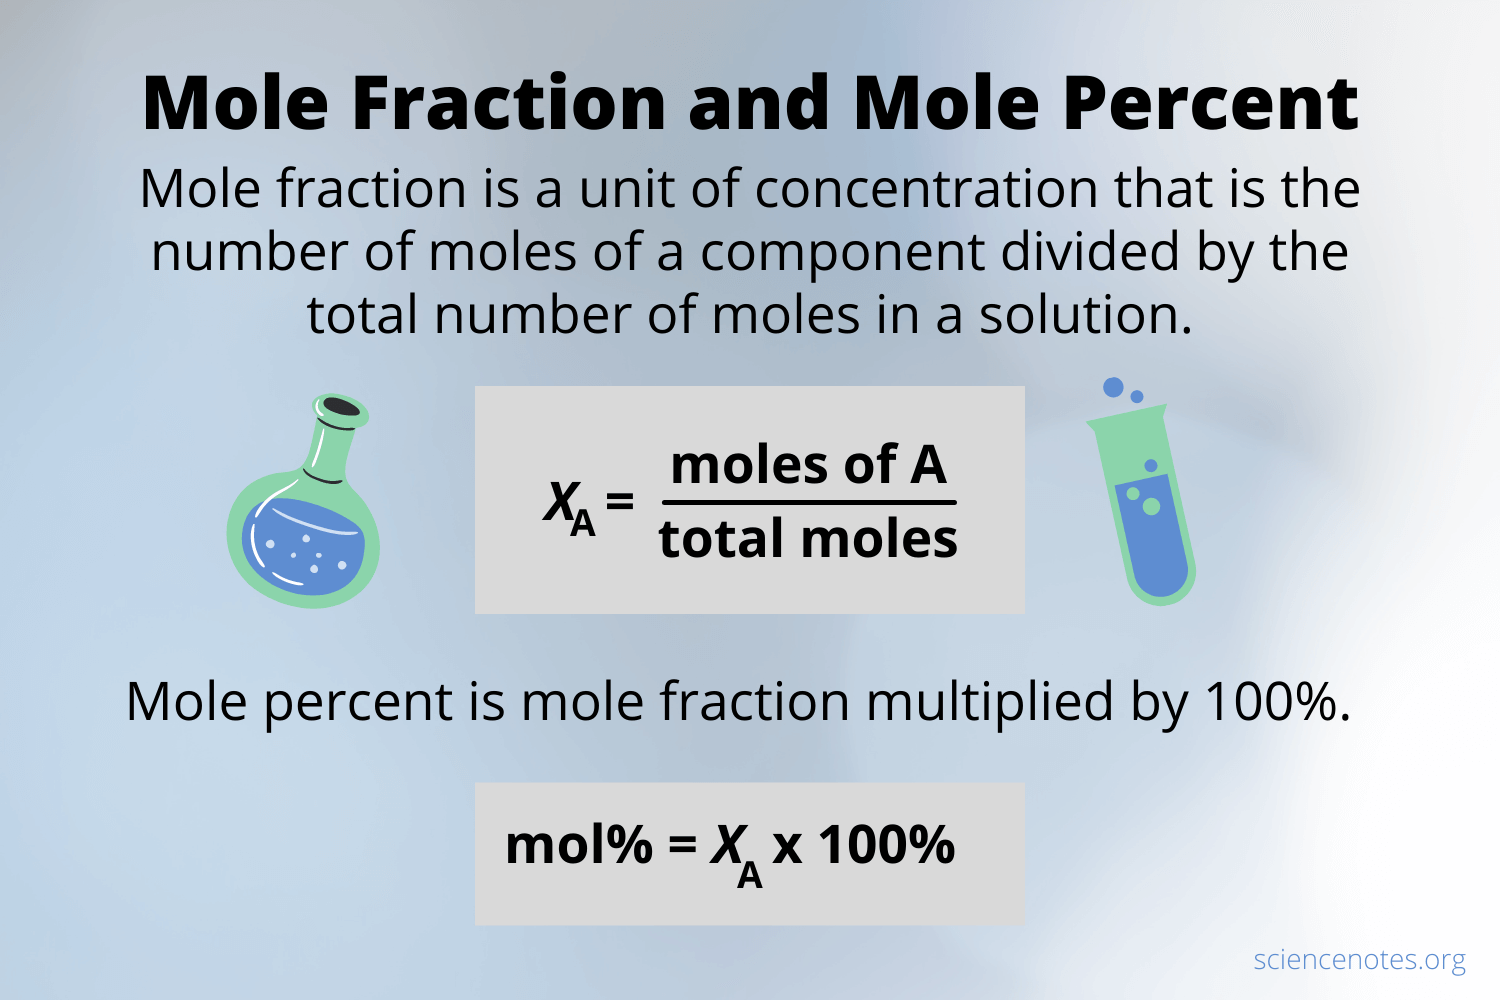 Mole-Fraction-and-Mole-Percent